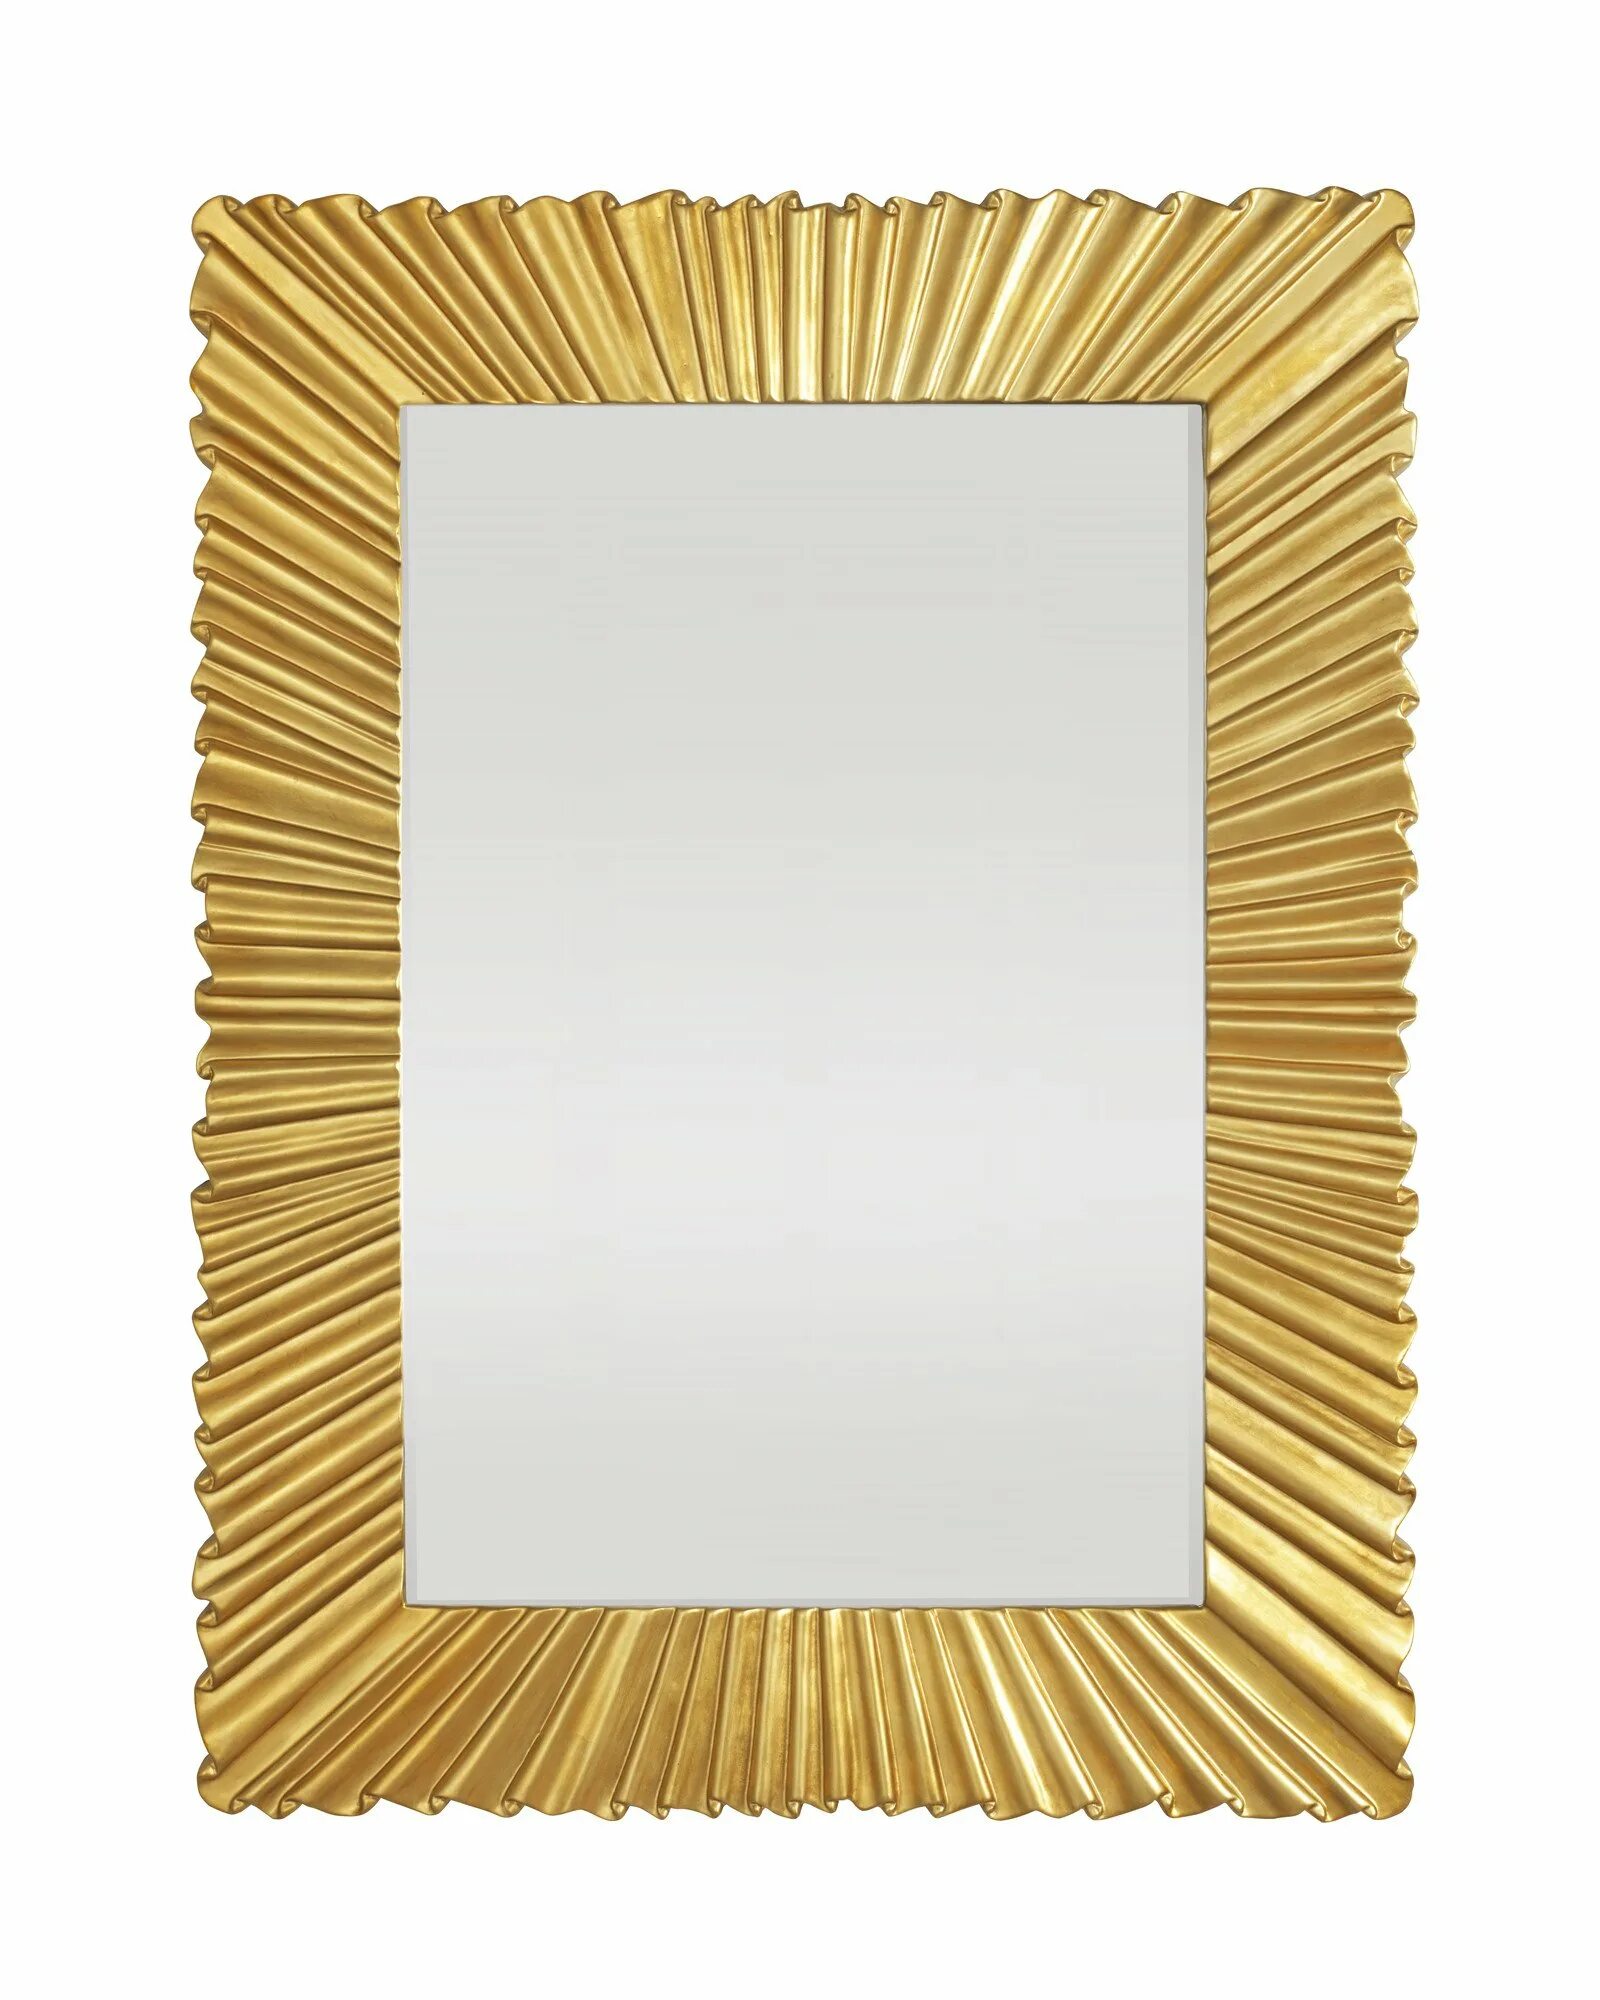 Зеркало Bosco золото. Зеркало настенное прямоугольное золото Эмпайр. Зеркало прямоугольное, арт, в105 / lo - Тиволи. Зеркало настенное катаро 60х180 мм рама золото.